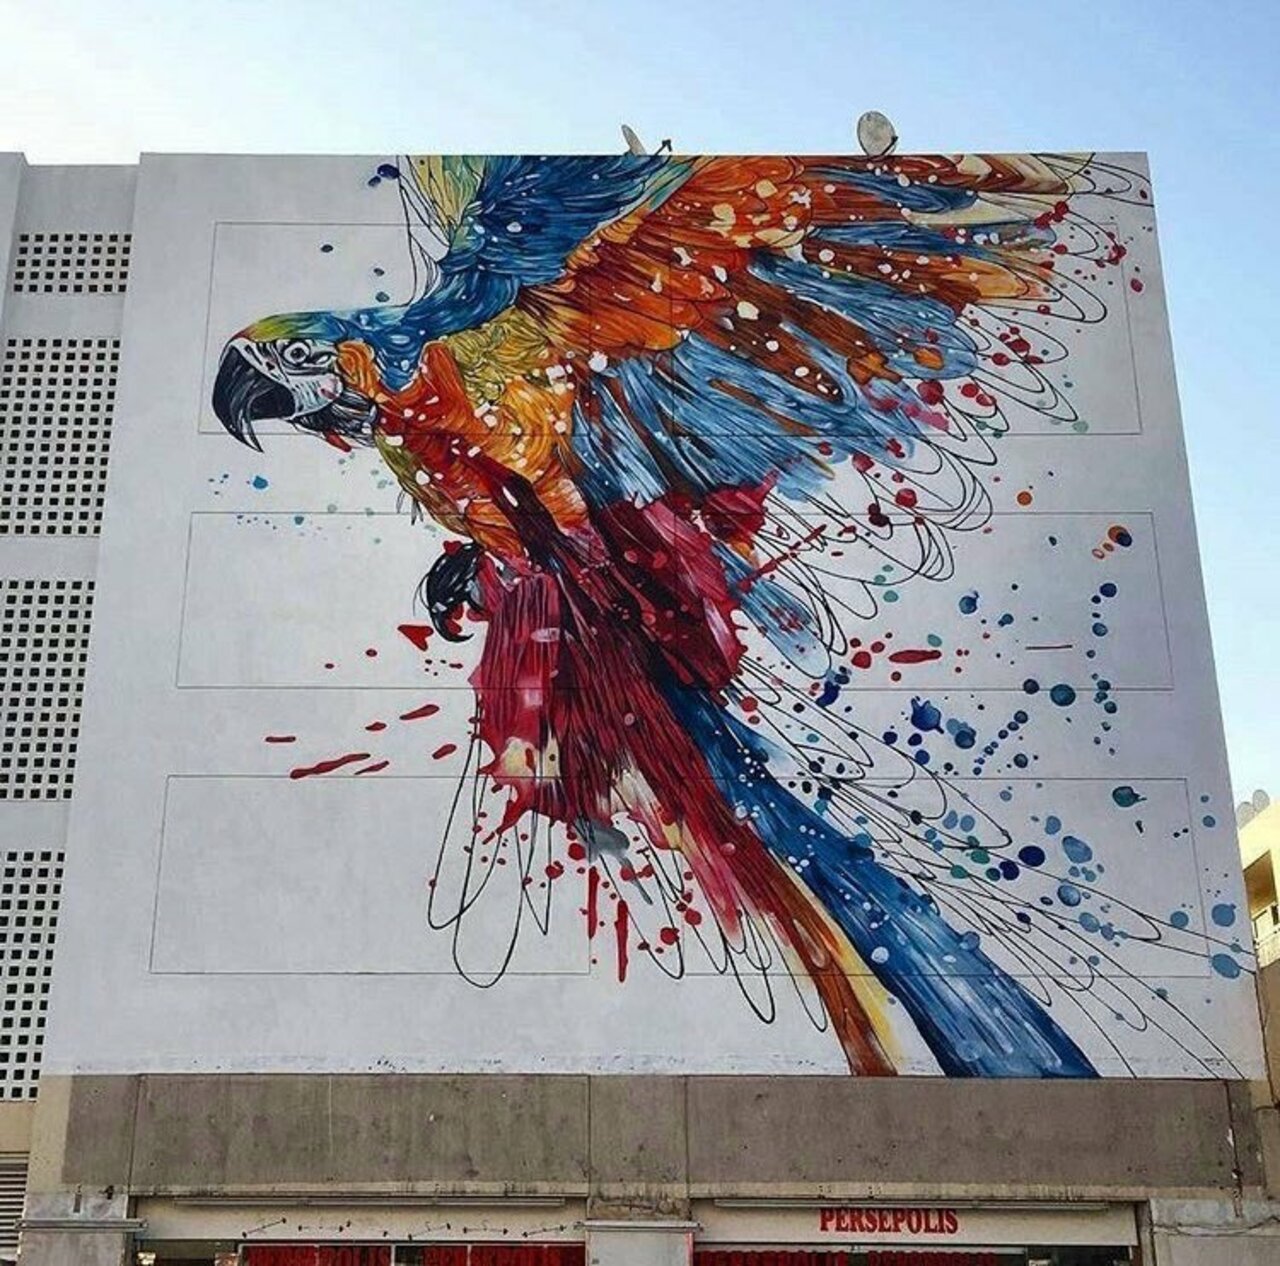 Mural by Katun & Yumzone #Dubai #art #graffiti #mural #streetart #urbanart https://t.co/aINuL0s2av